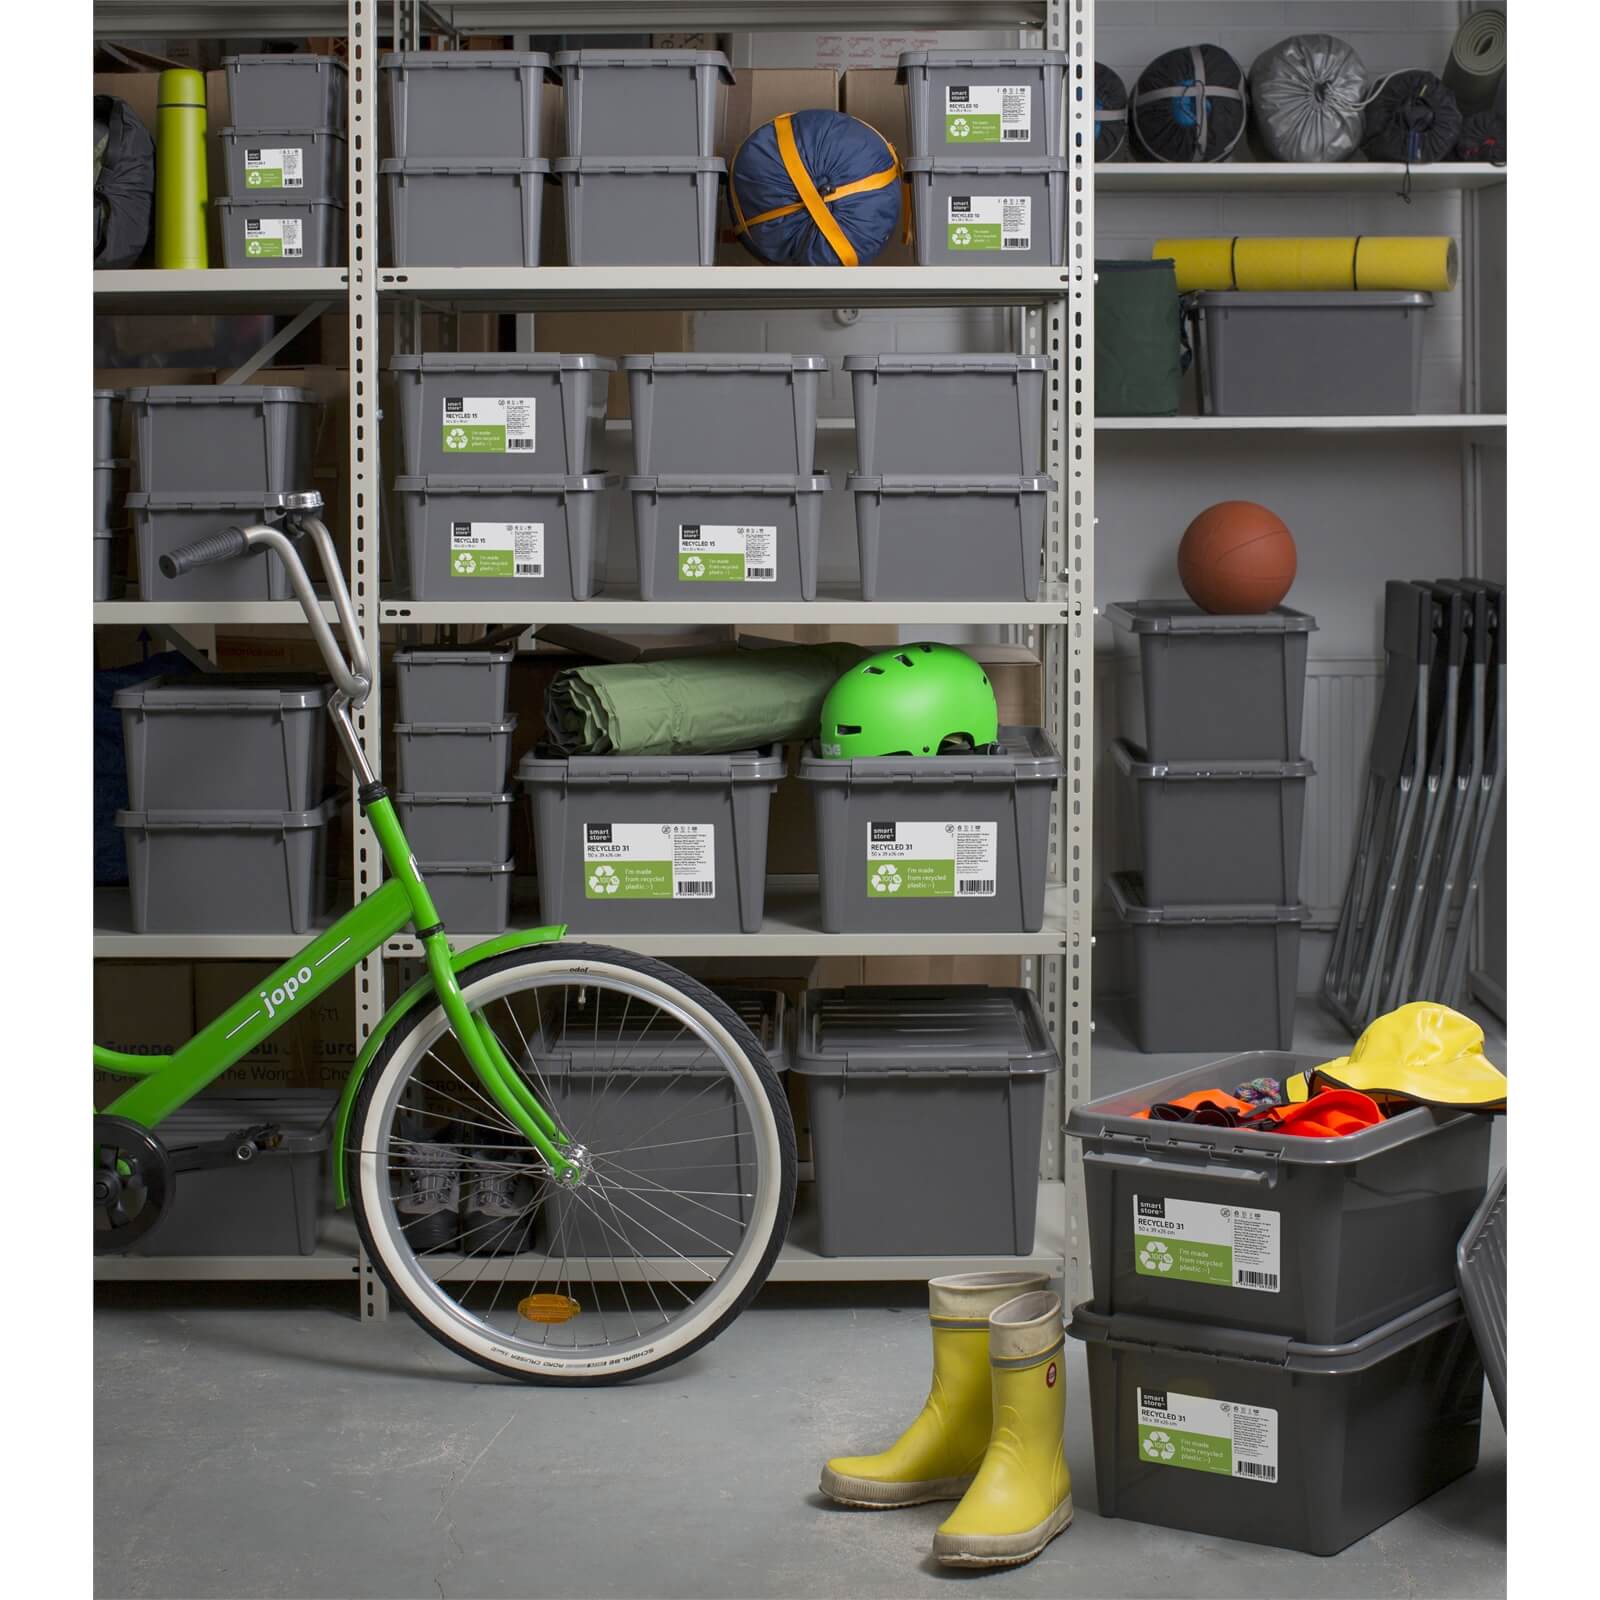 SmartStore Recycled Storage Box 10